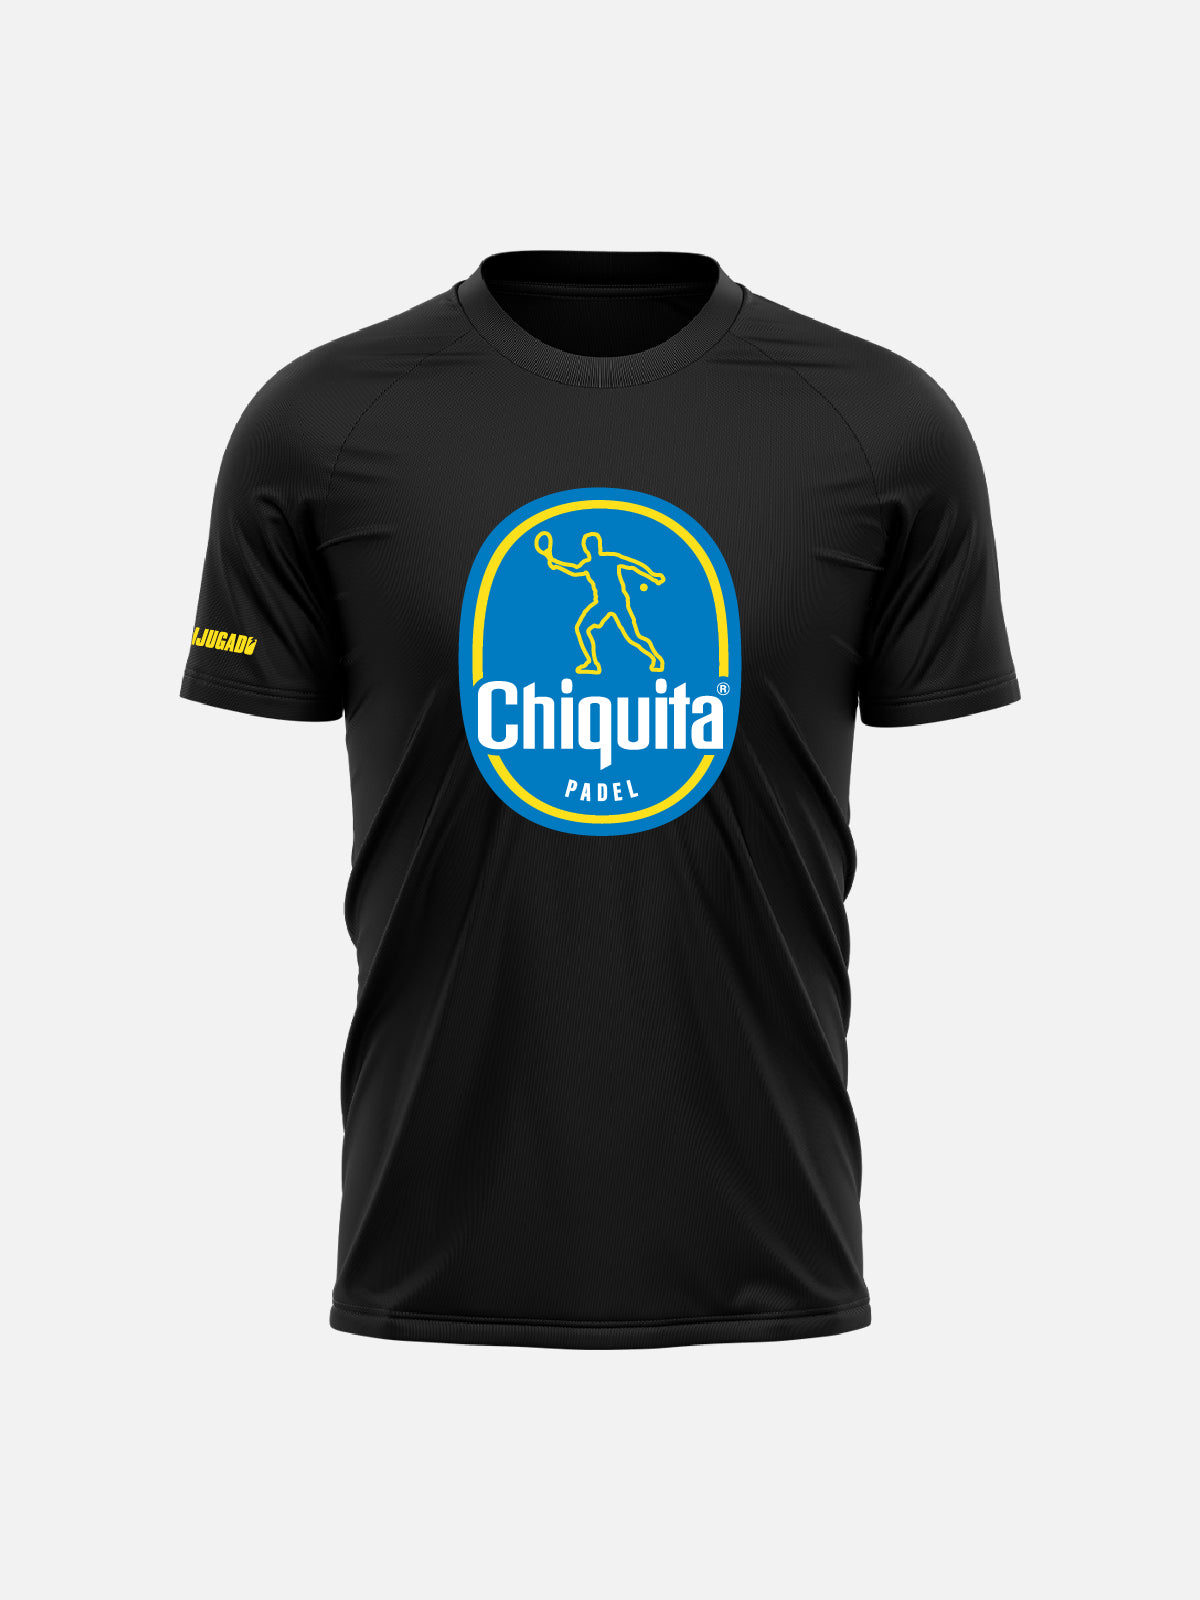 Fun Quick Dry T-Shirt - Chiquita